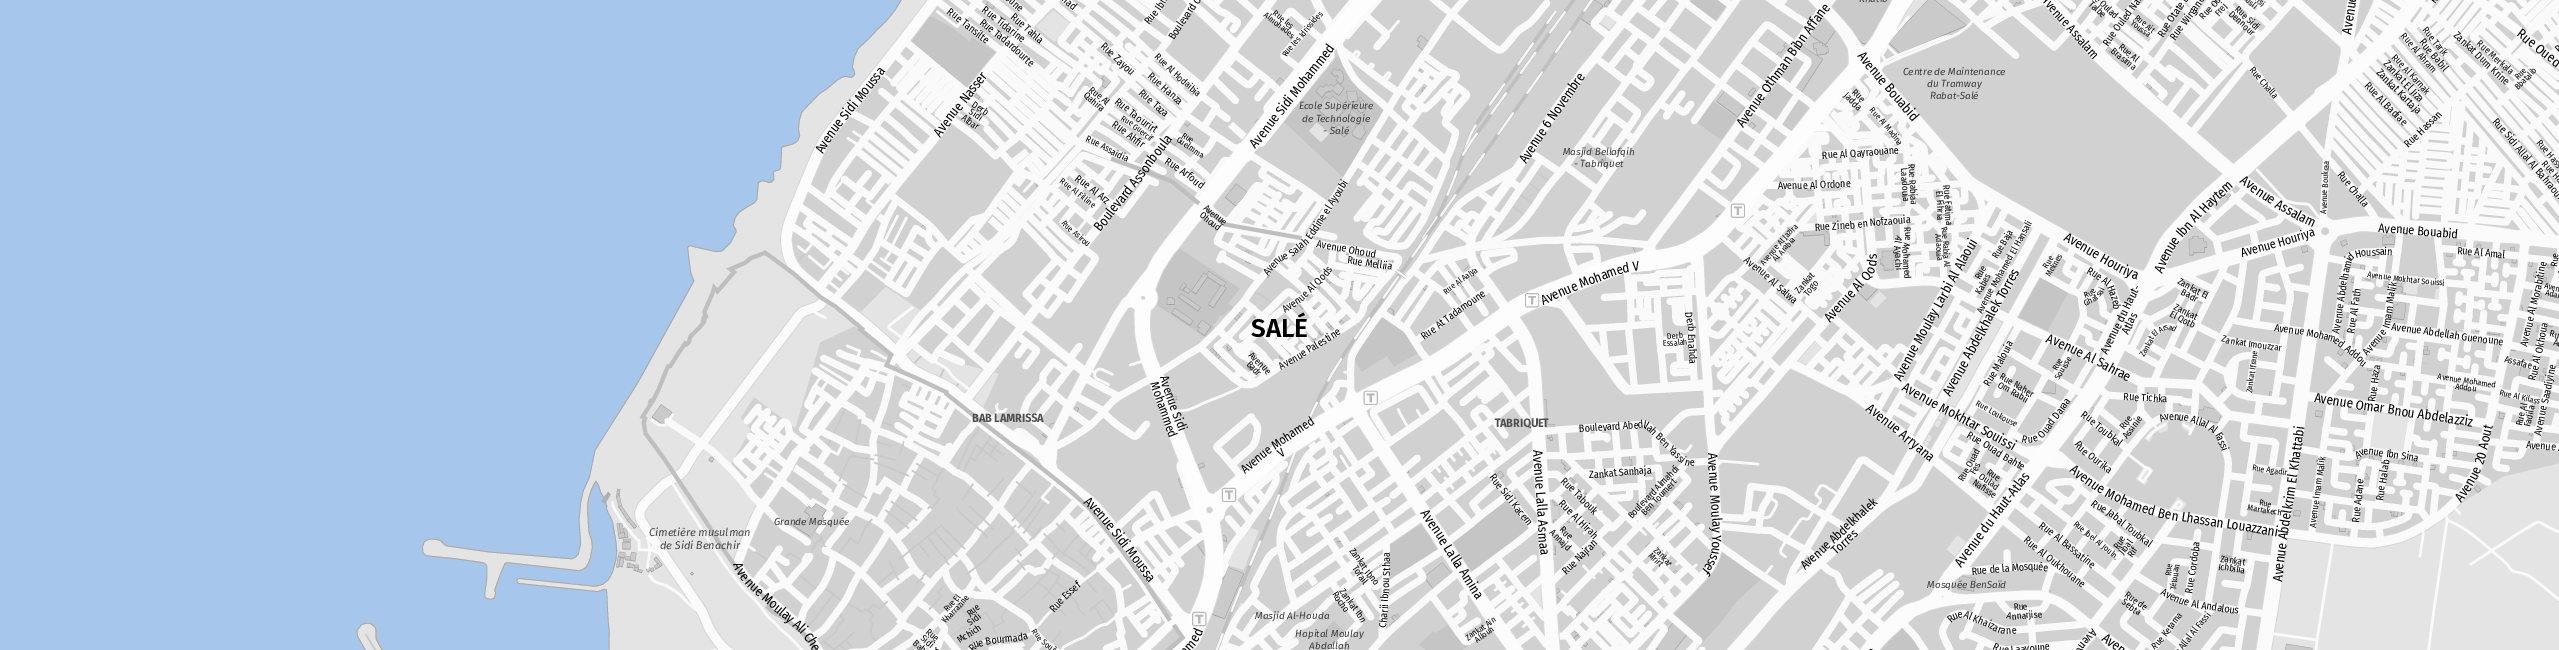 Stadtplan Salé zum Downloaden.